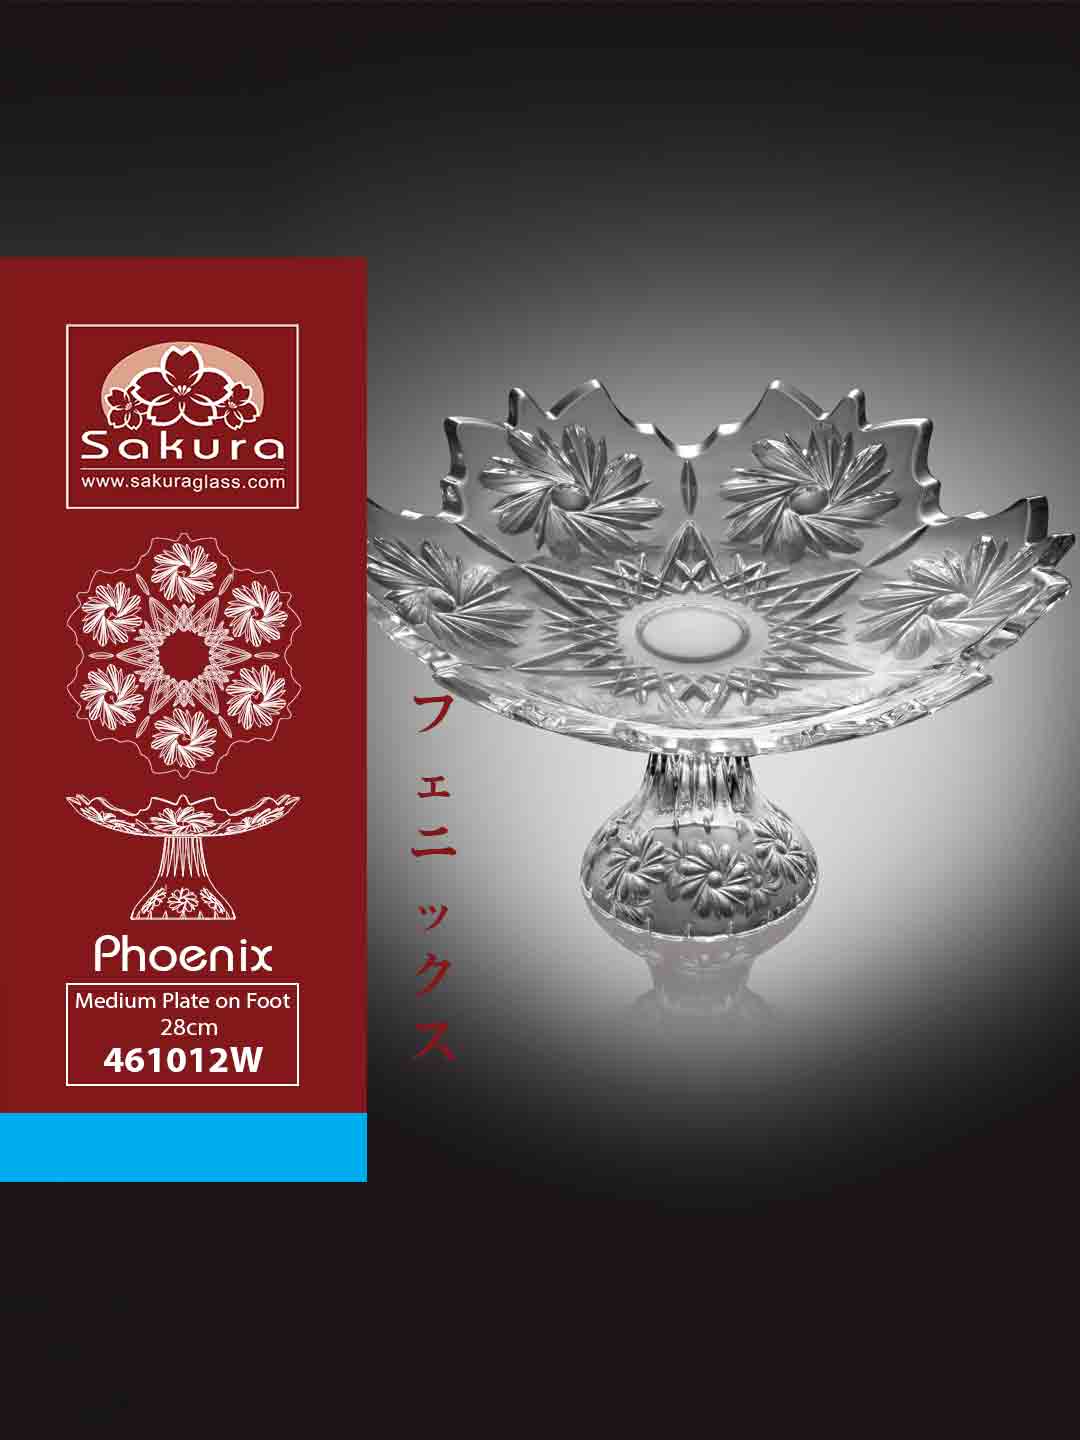 Sakura Product Phoenix Medium Plate on Foot 28cm 461012W